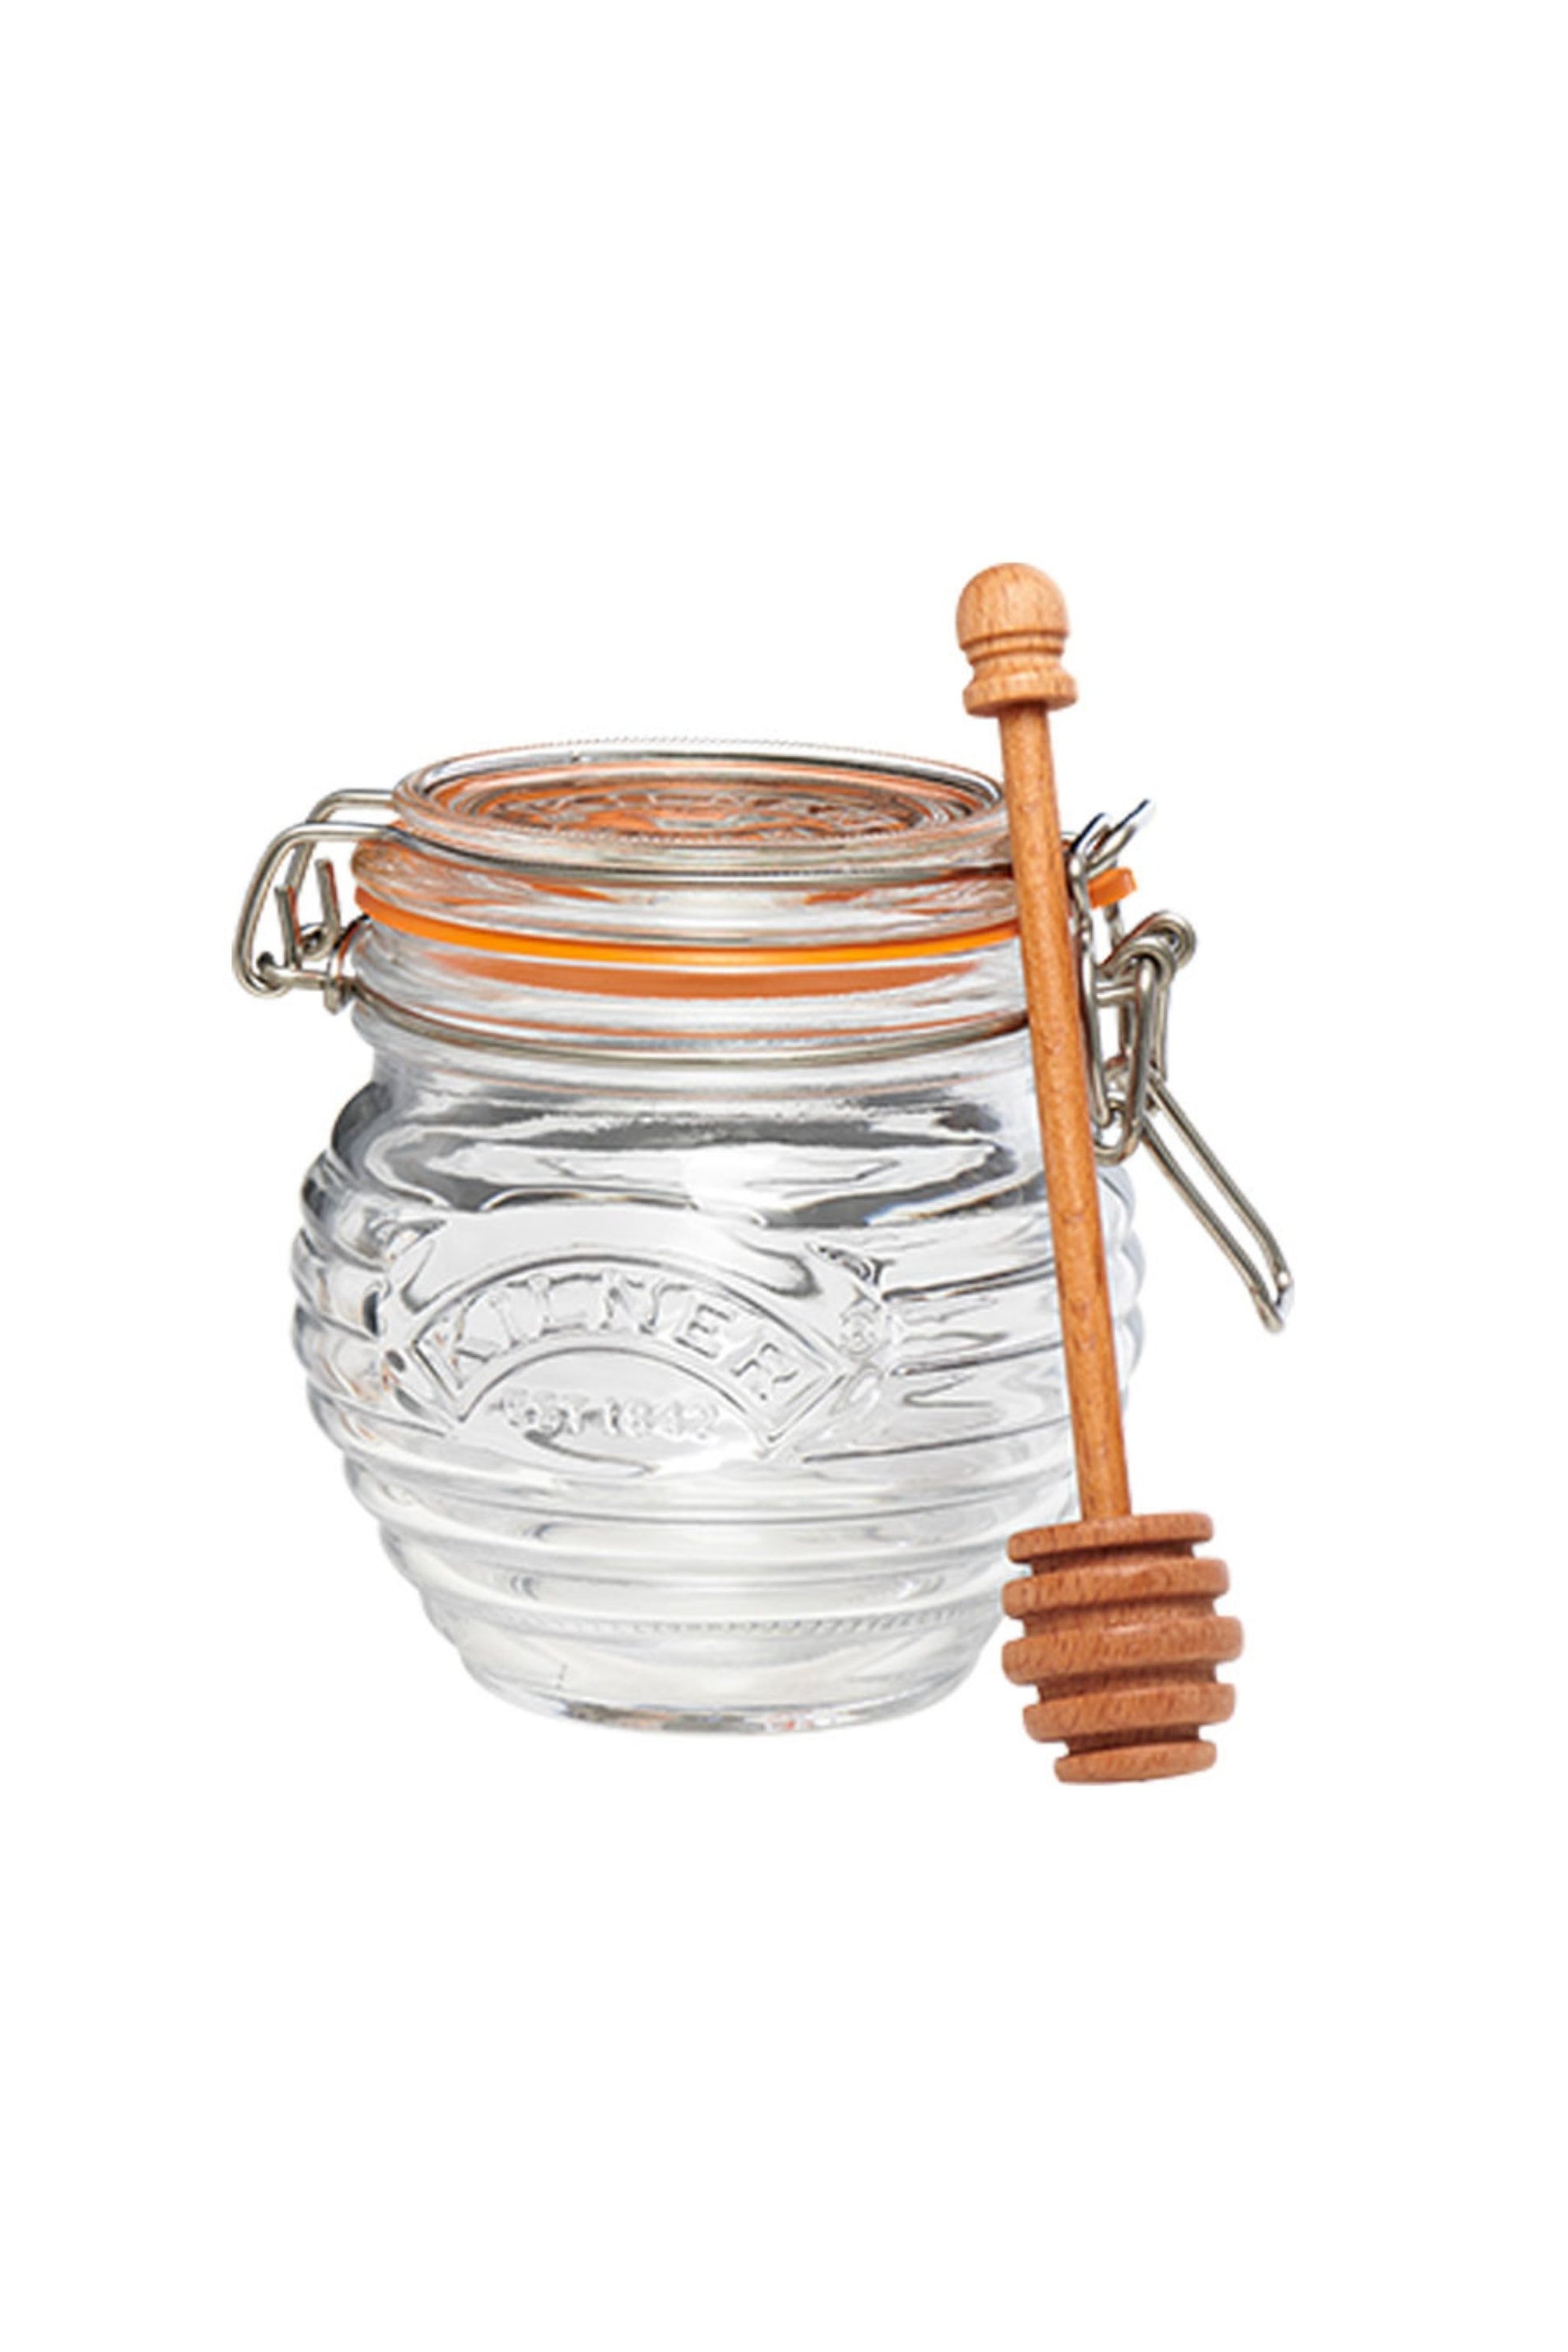 Kilner Glass Honey Pot Set – Savannah Bee Company